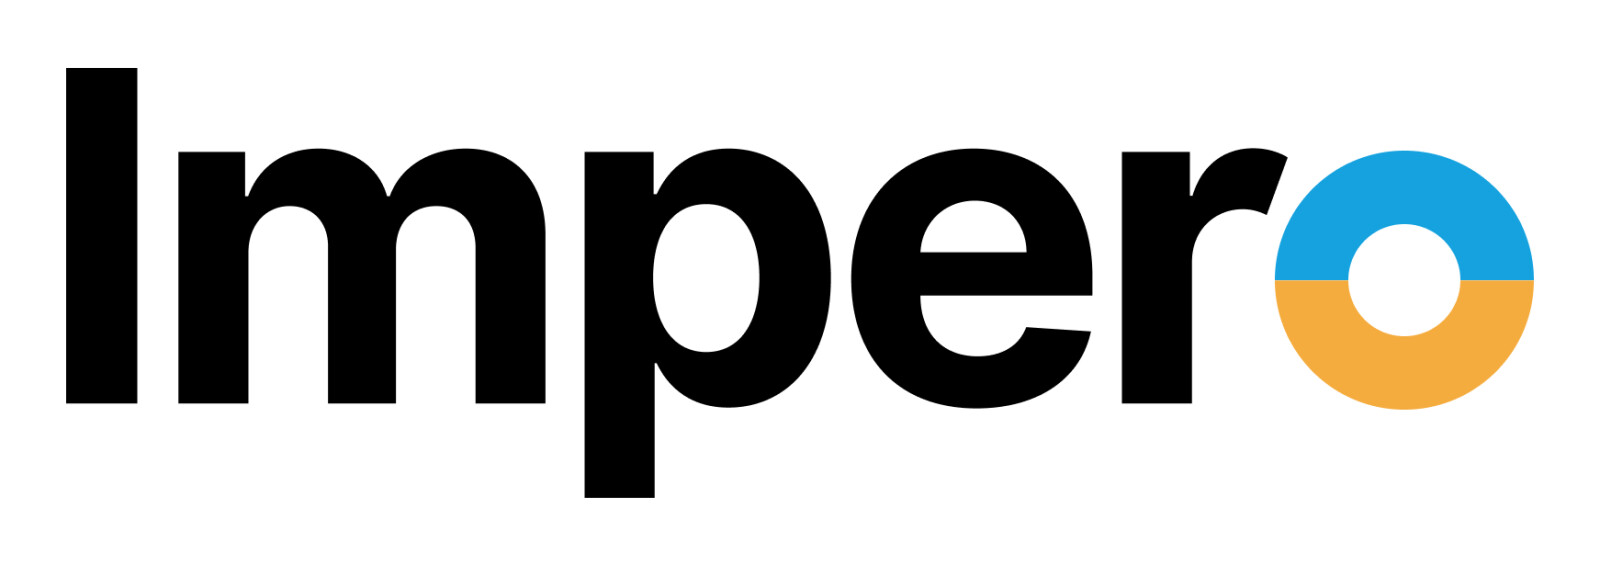 impero-dark-logo-nl.jpg